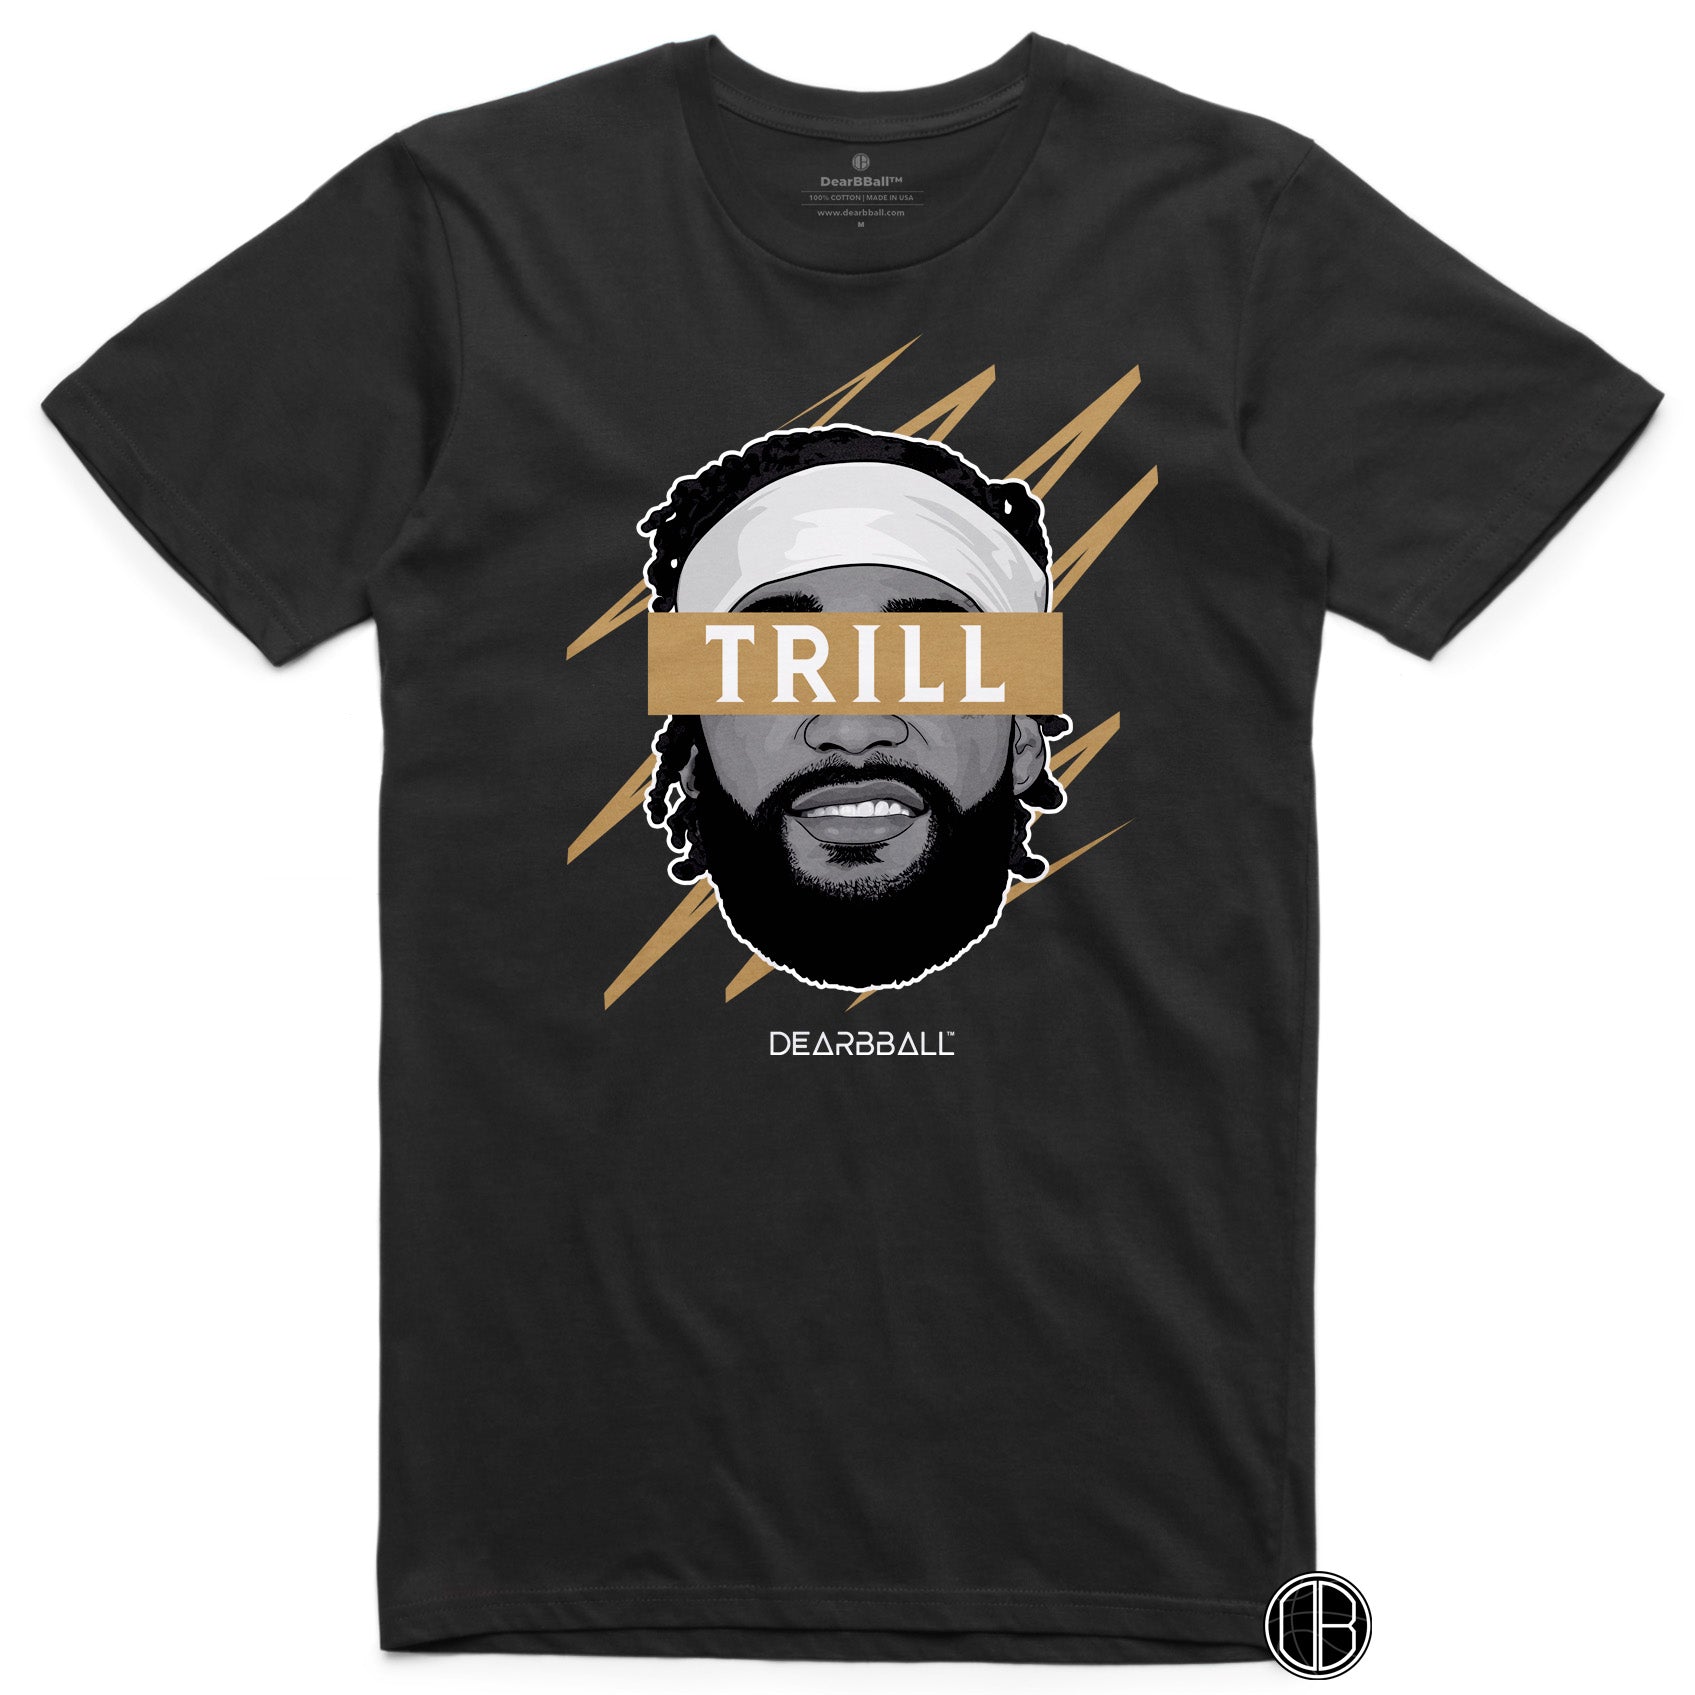 DearBBall T-Shirt - TRILL Gold Edition